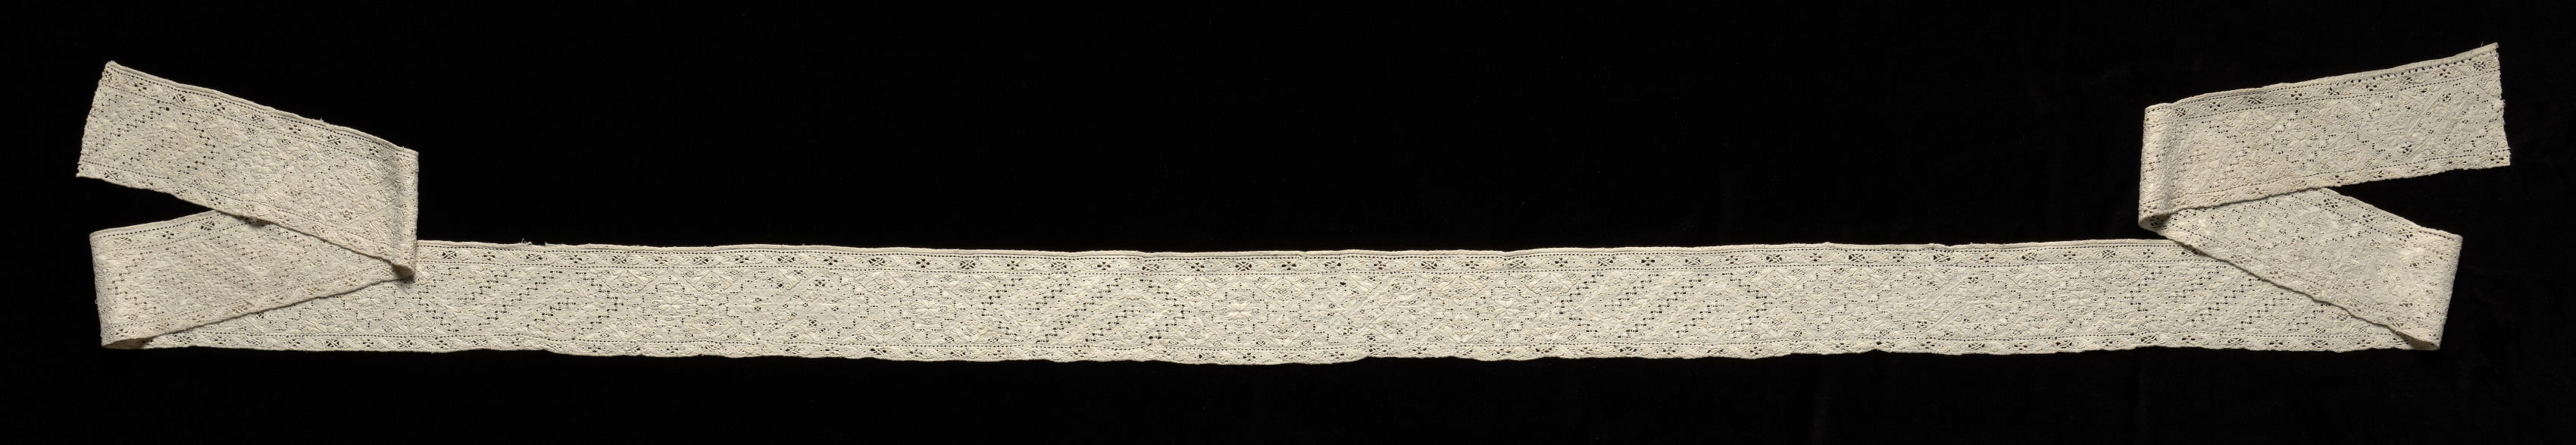 Needlepoint (Cutwork) Lace Band